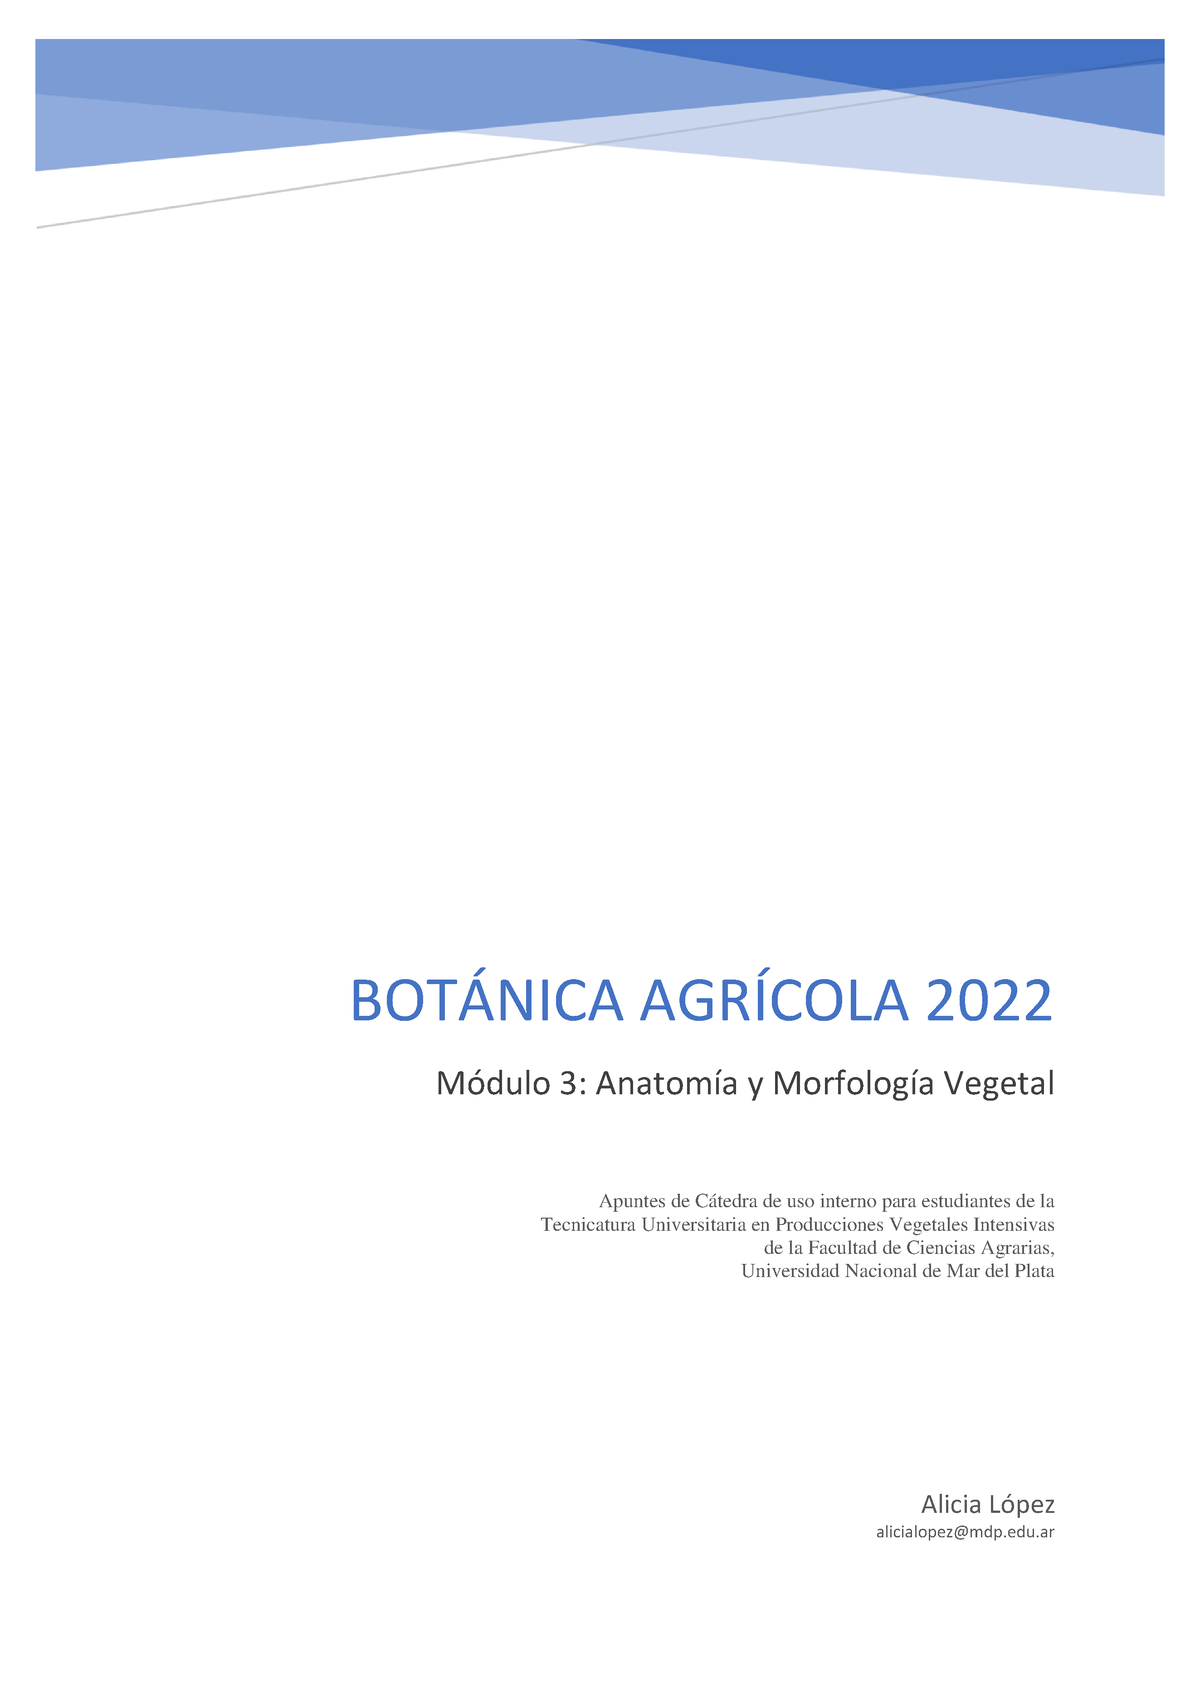 Botanica Agricola Tupvi Módulo 3 Anatomía Y Morfología Vegetal Bot¡nica AgrÕcola 2022 4756